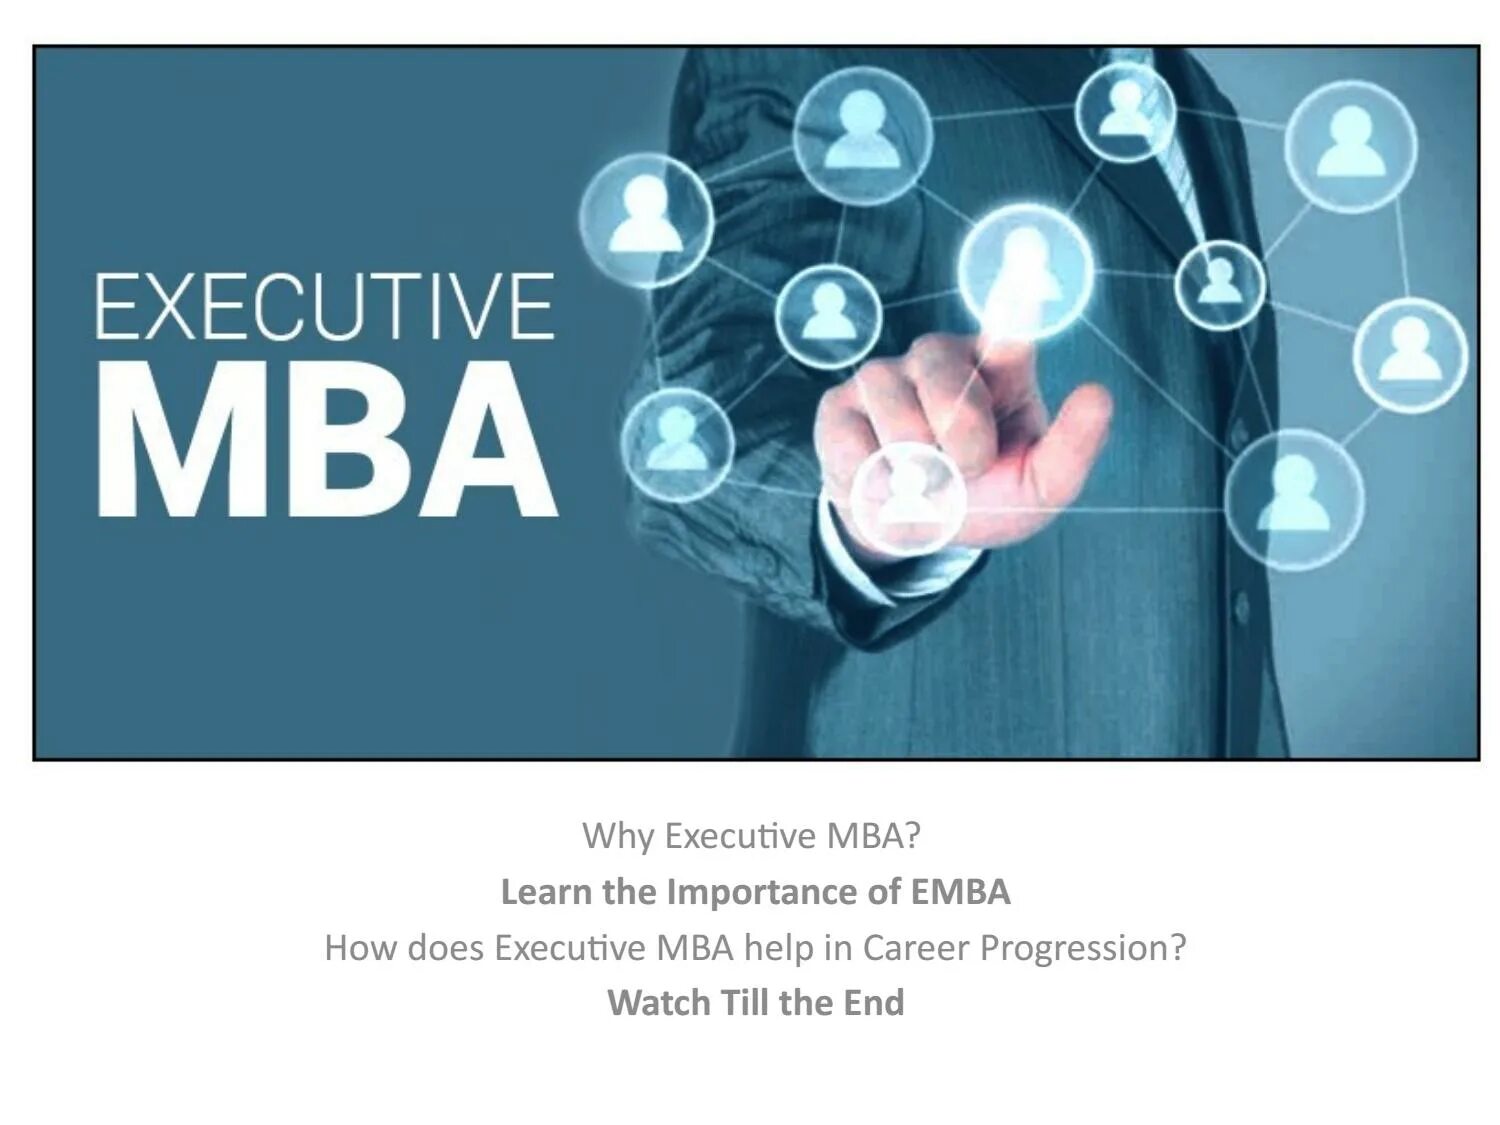 EMBA. Курсы MBA. Executive MBA. MBA В картинках.